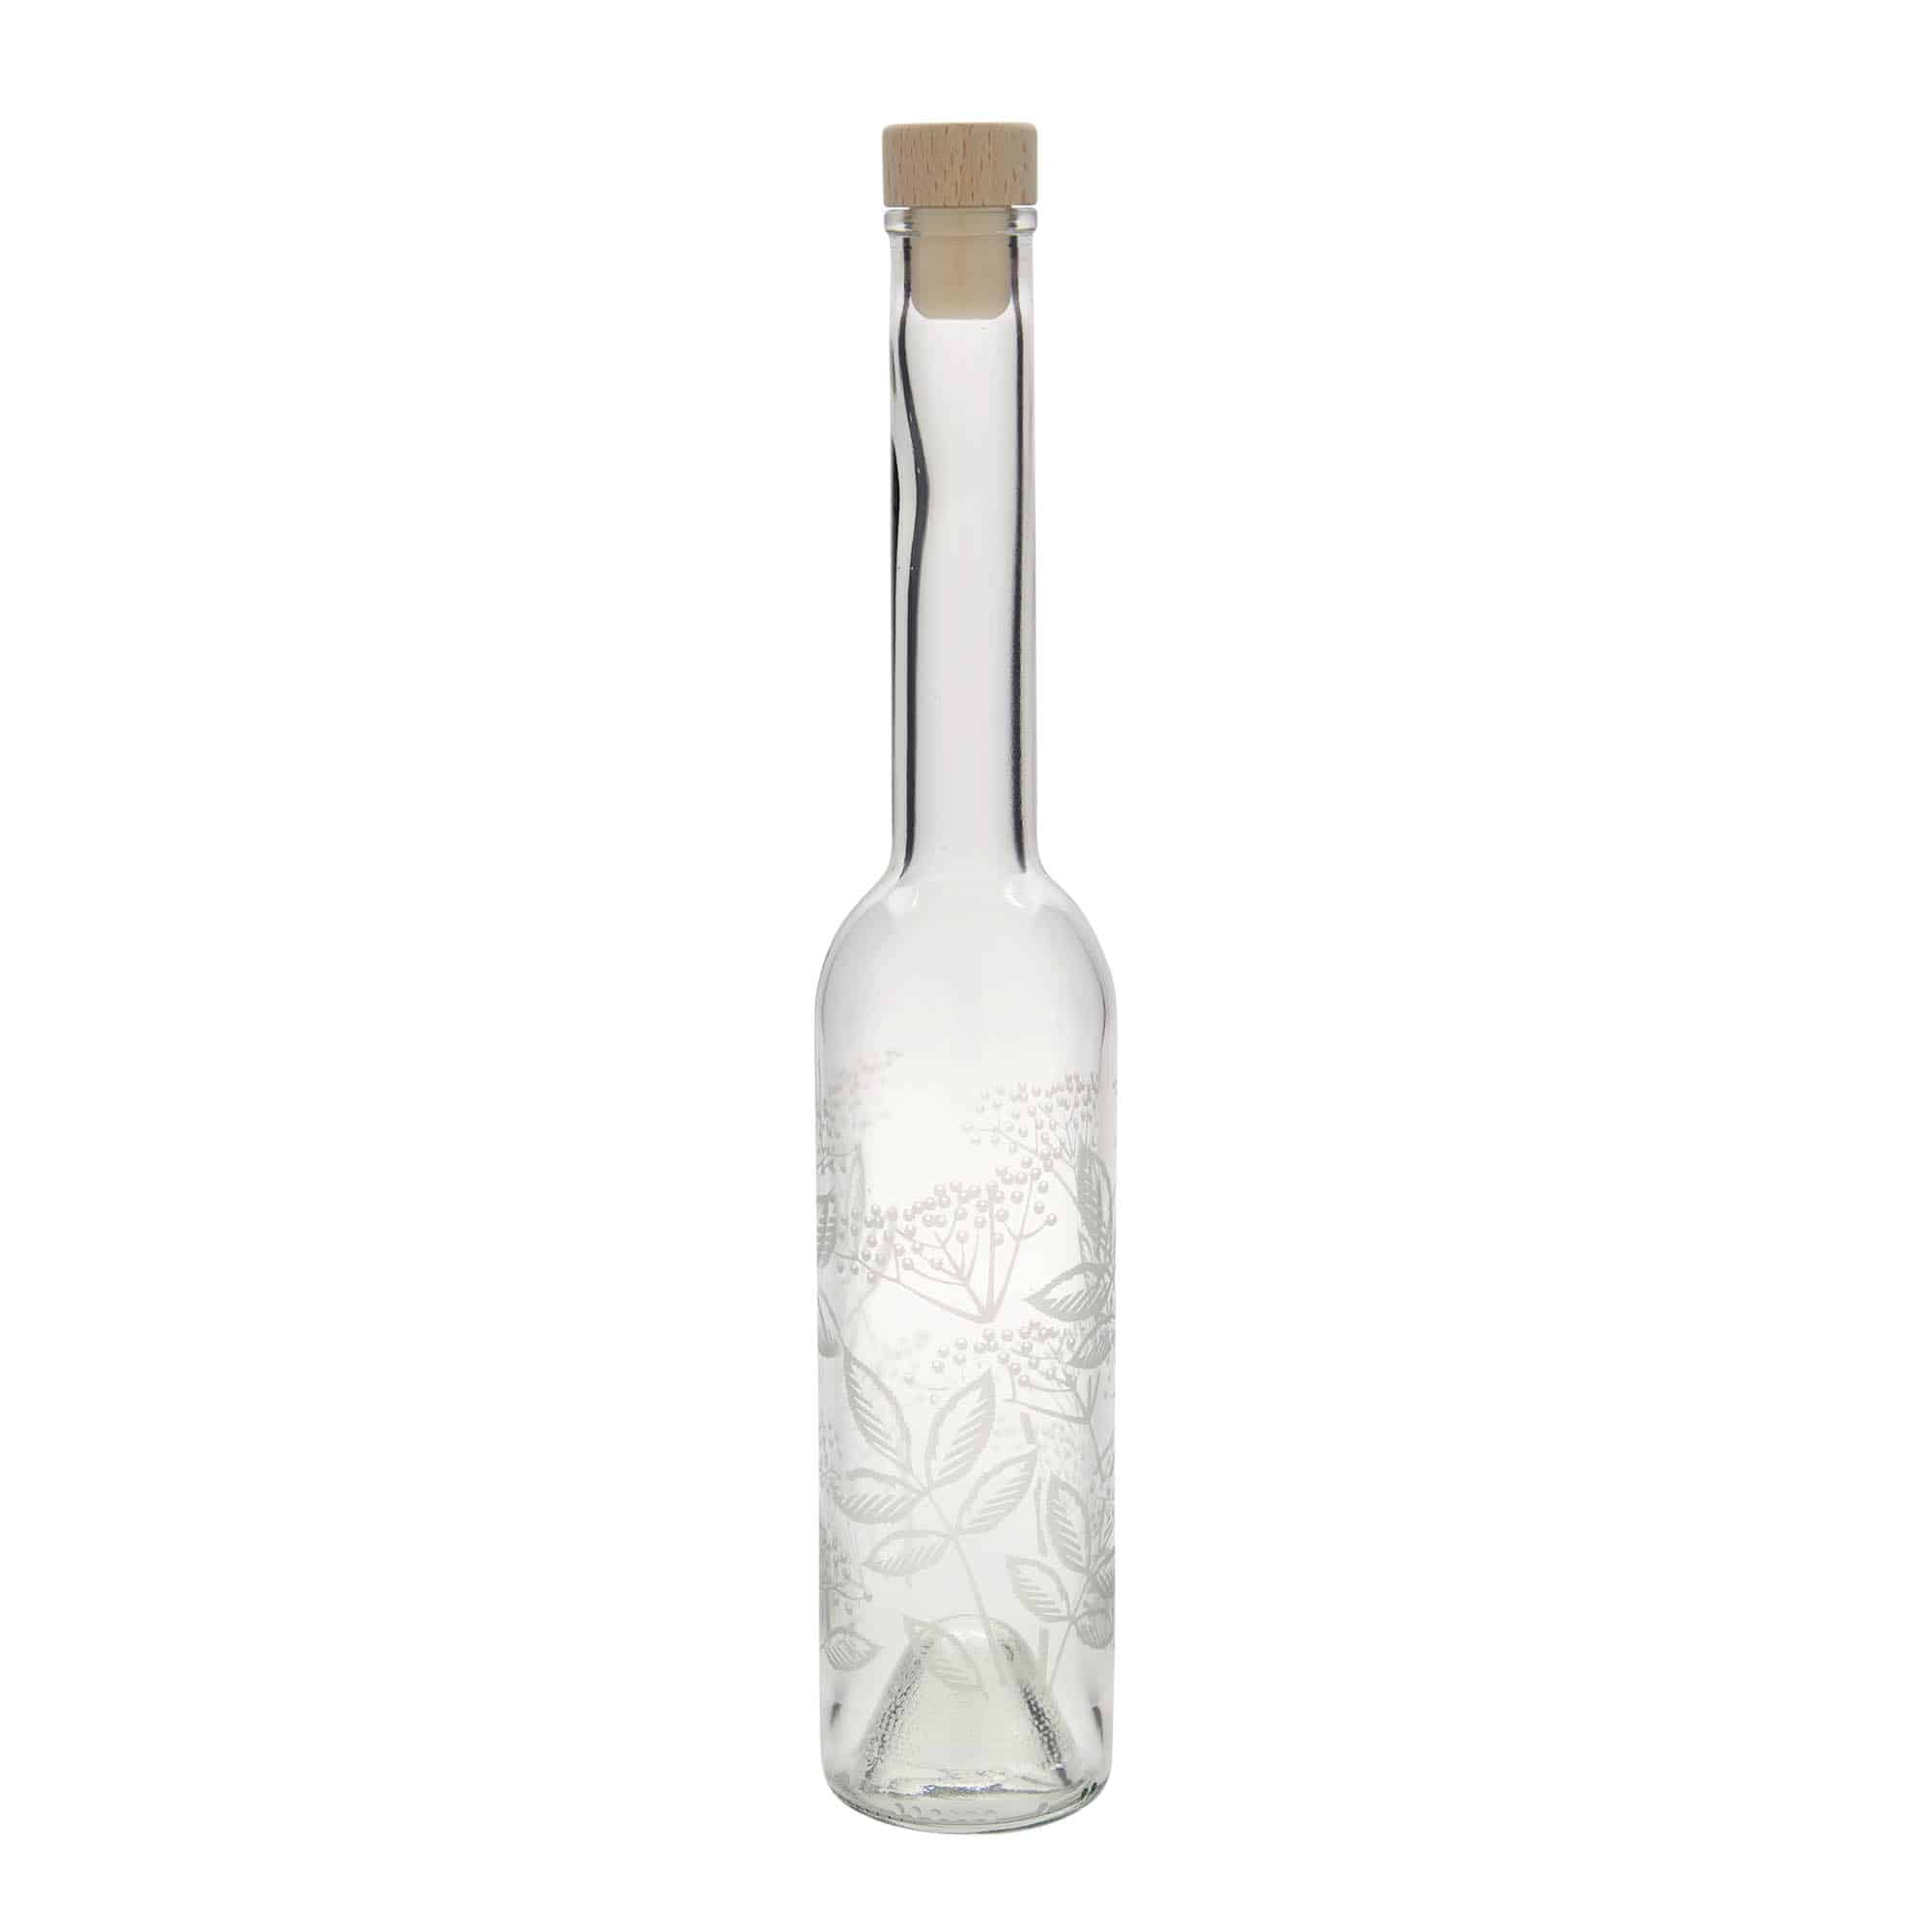 350 ml glass bottle 'Opera', print: elderberry, closure: cork